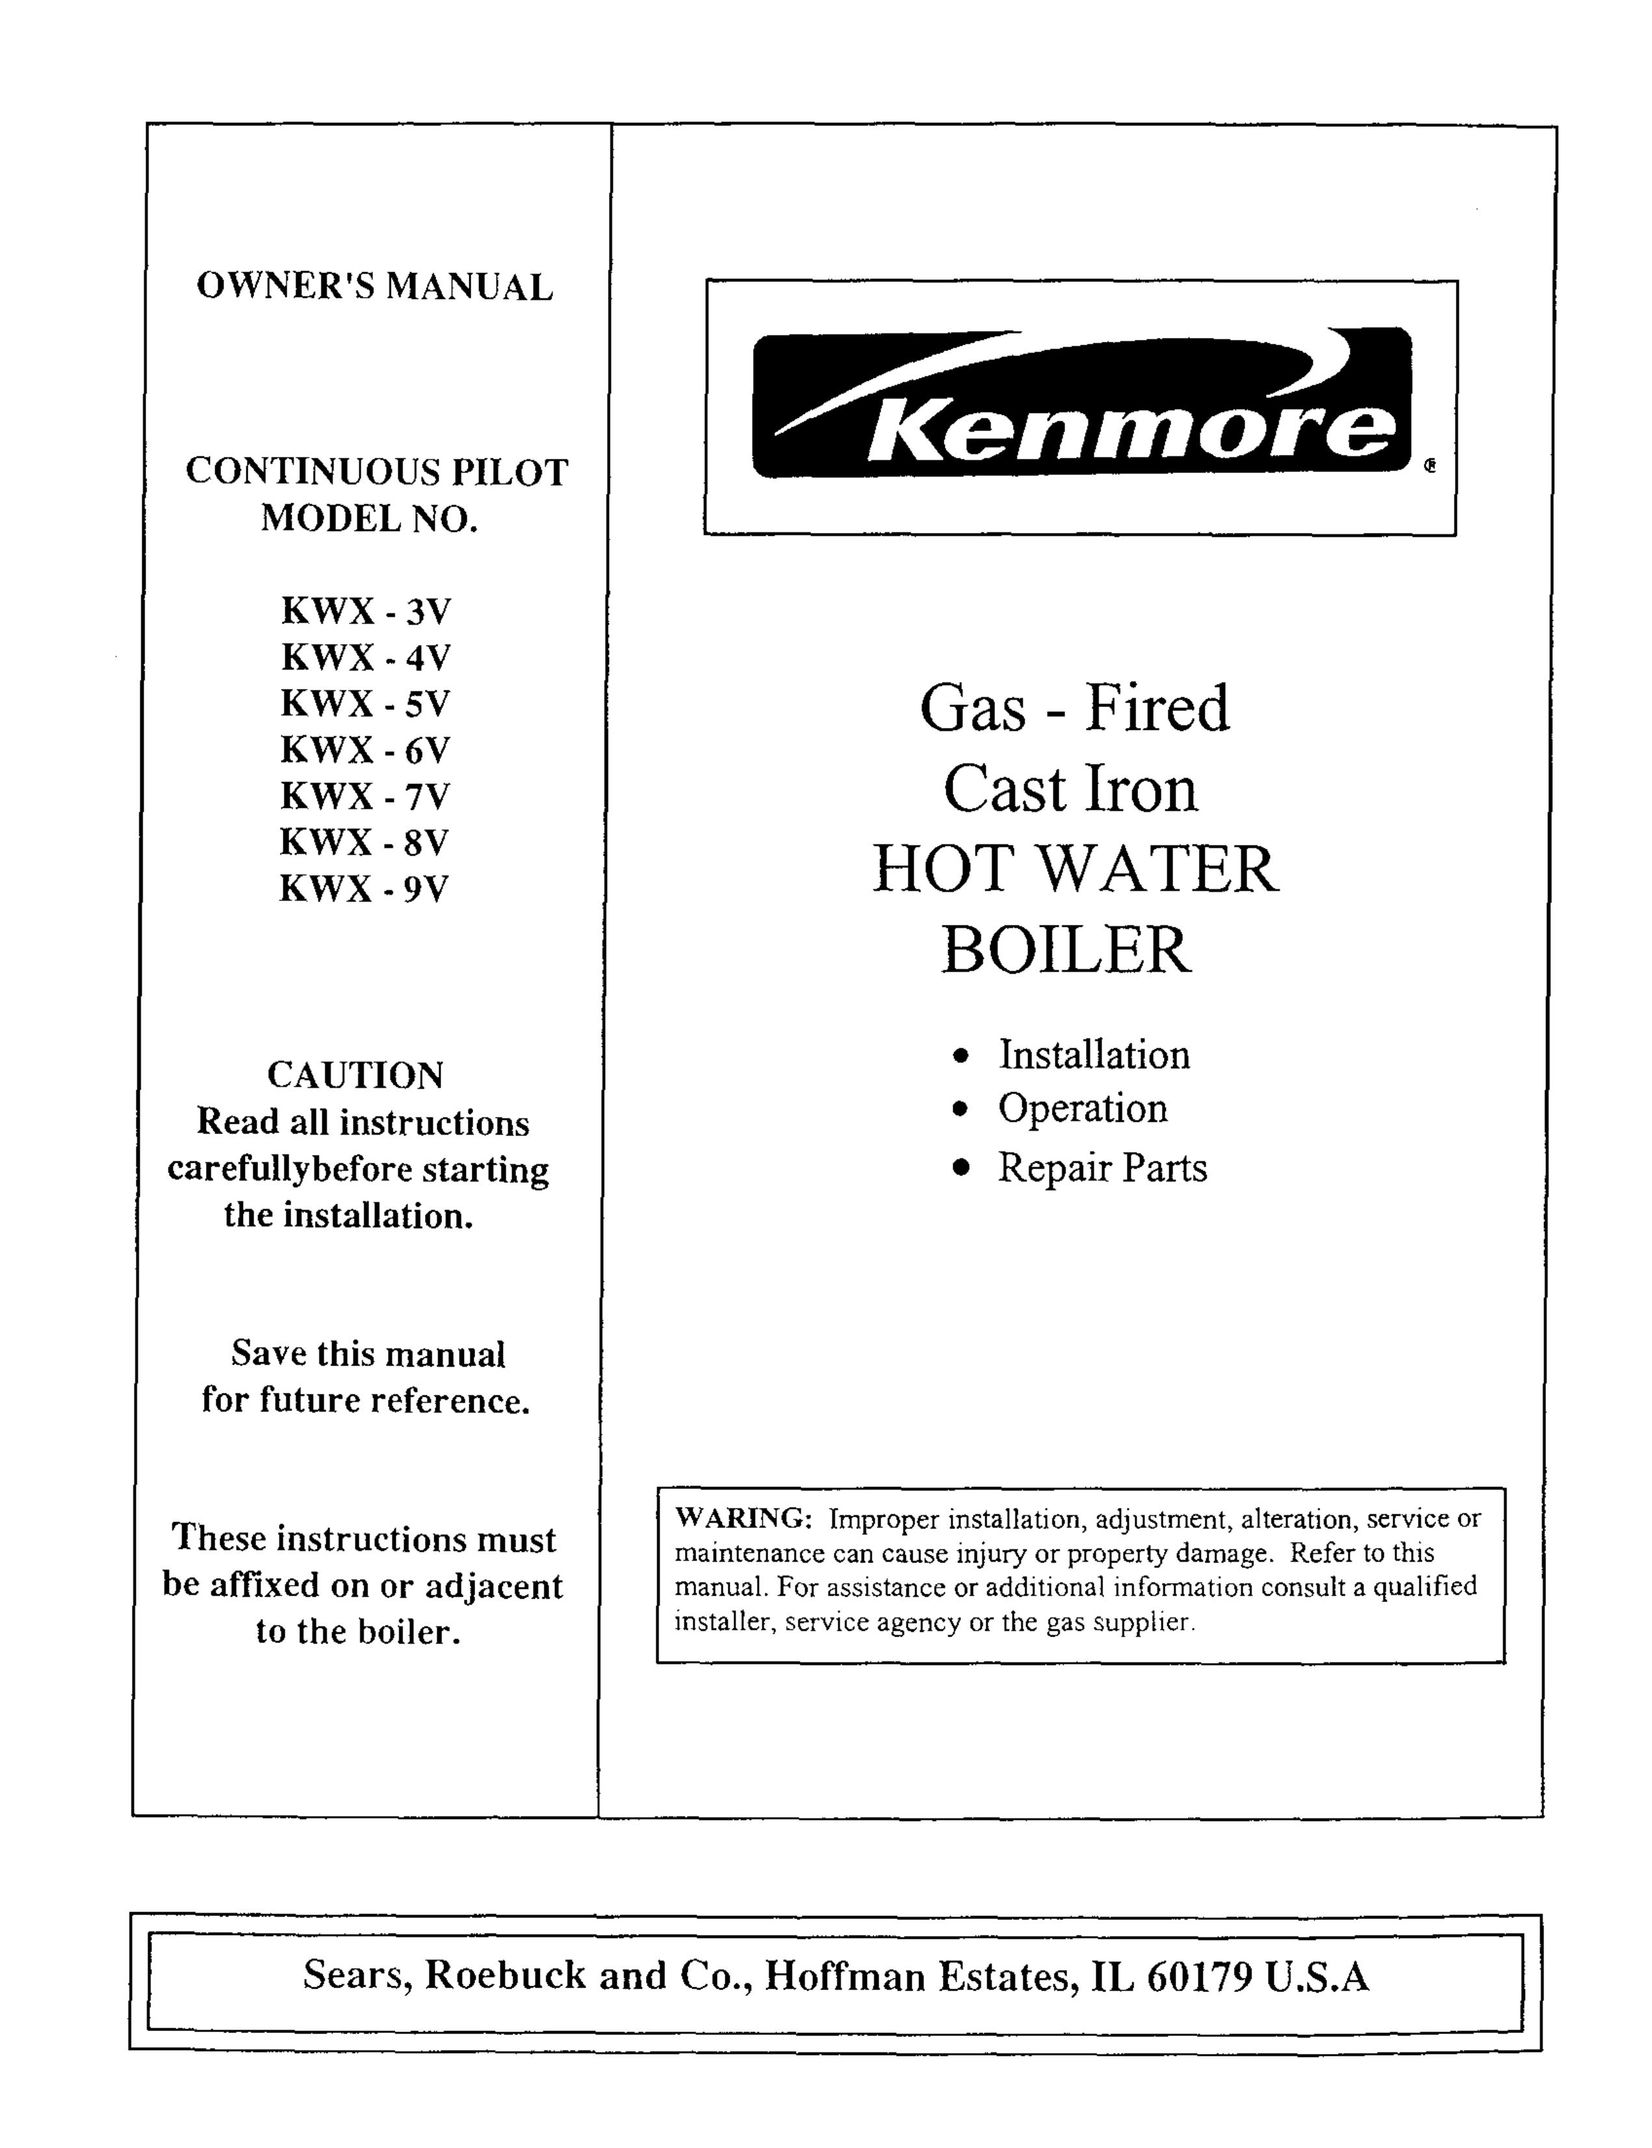 Kenmore KWX - 6V Boiler User Manual